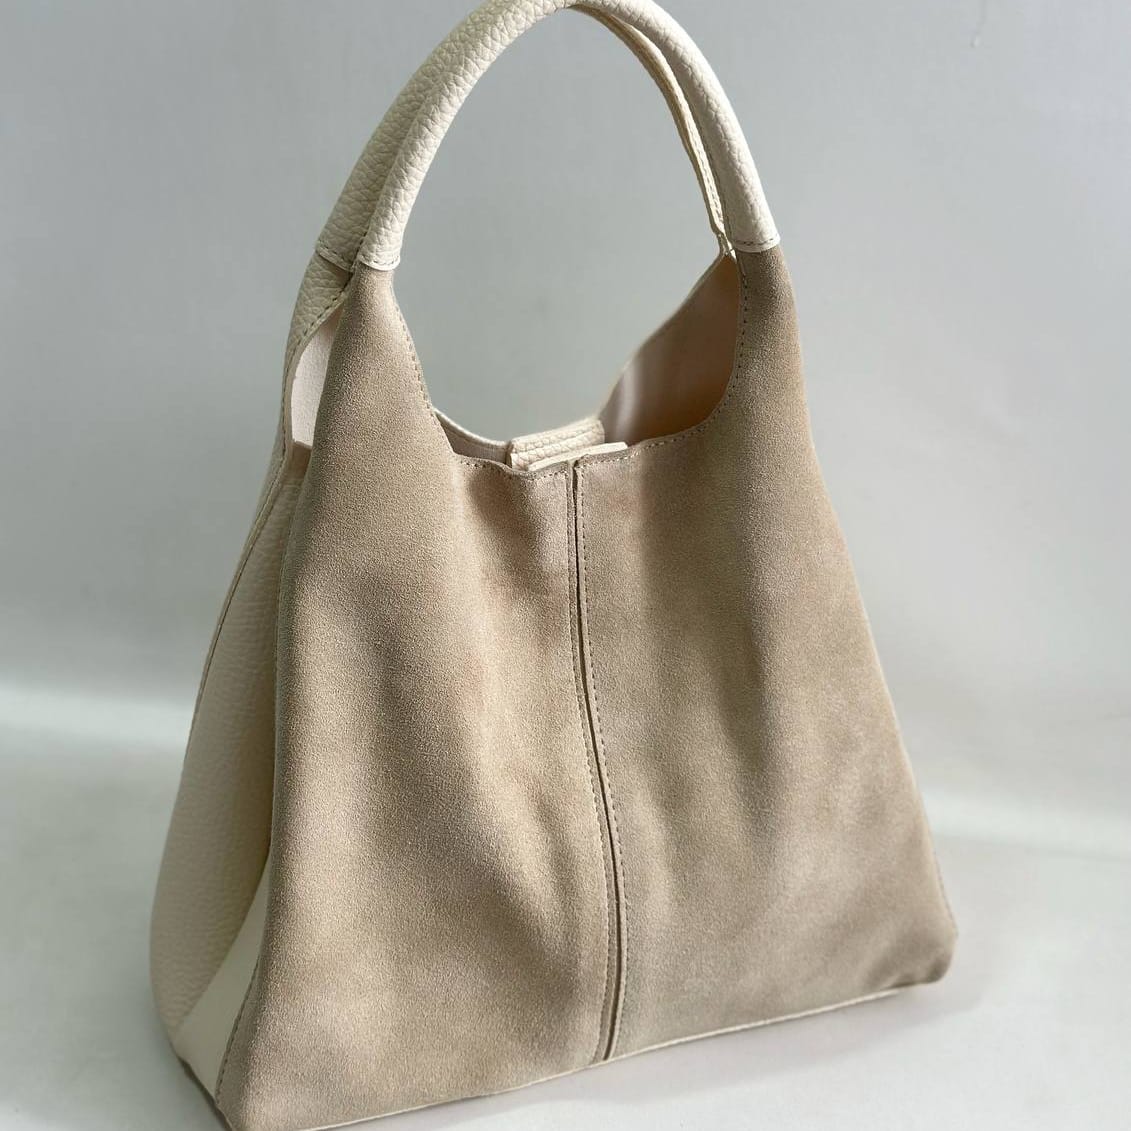 Velvet and leather Ladies Tote bag